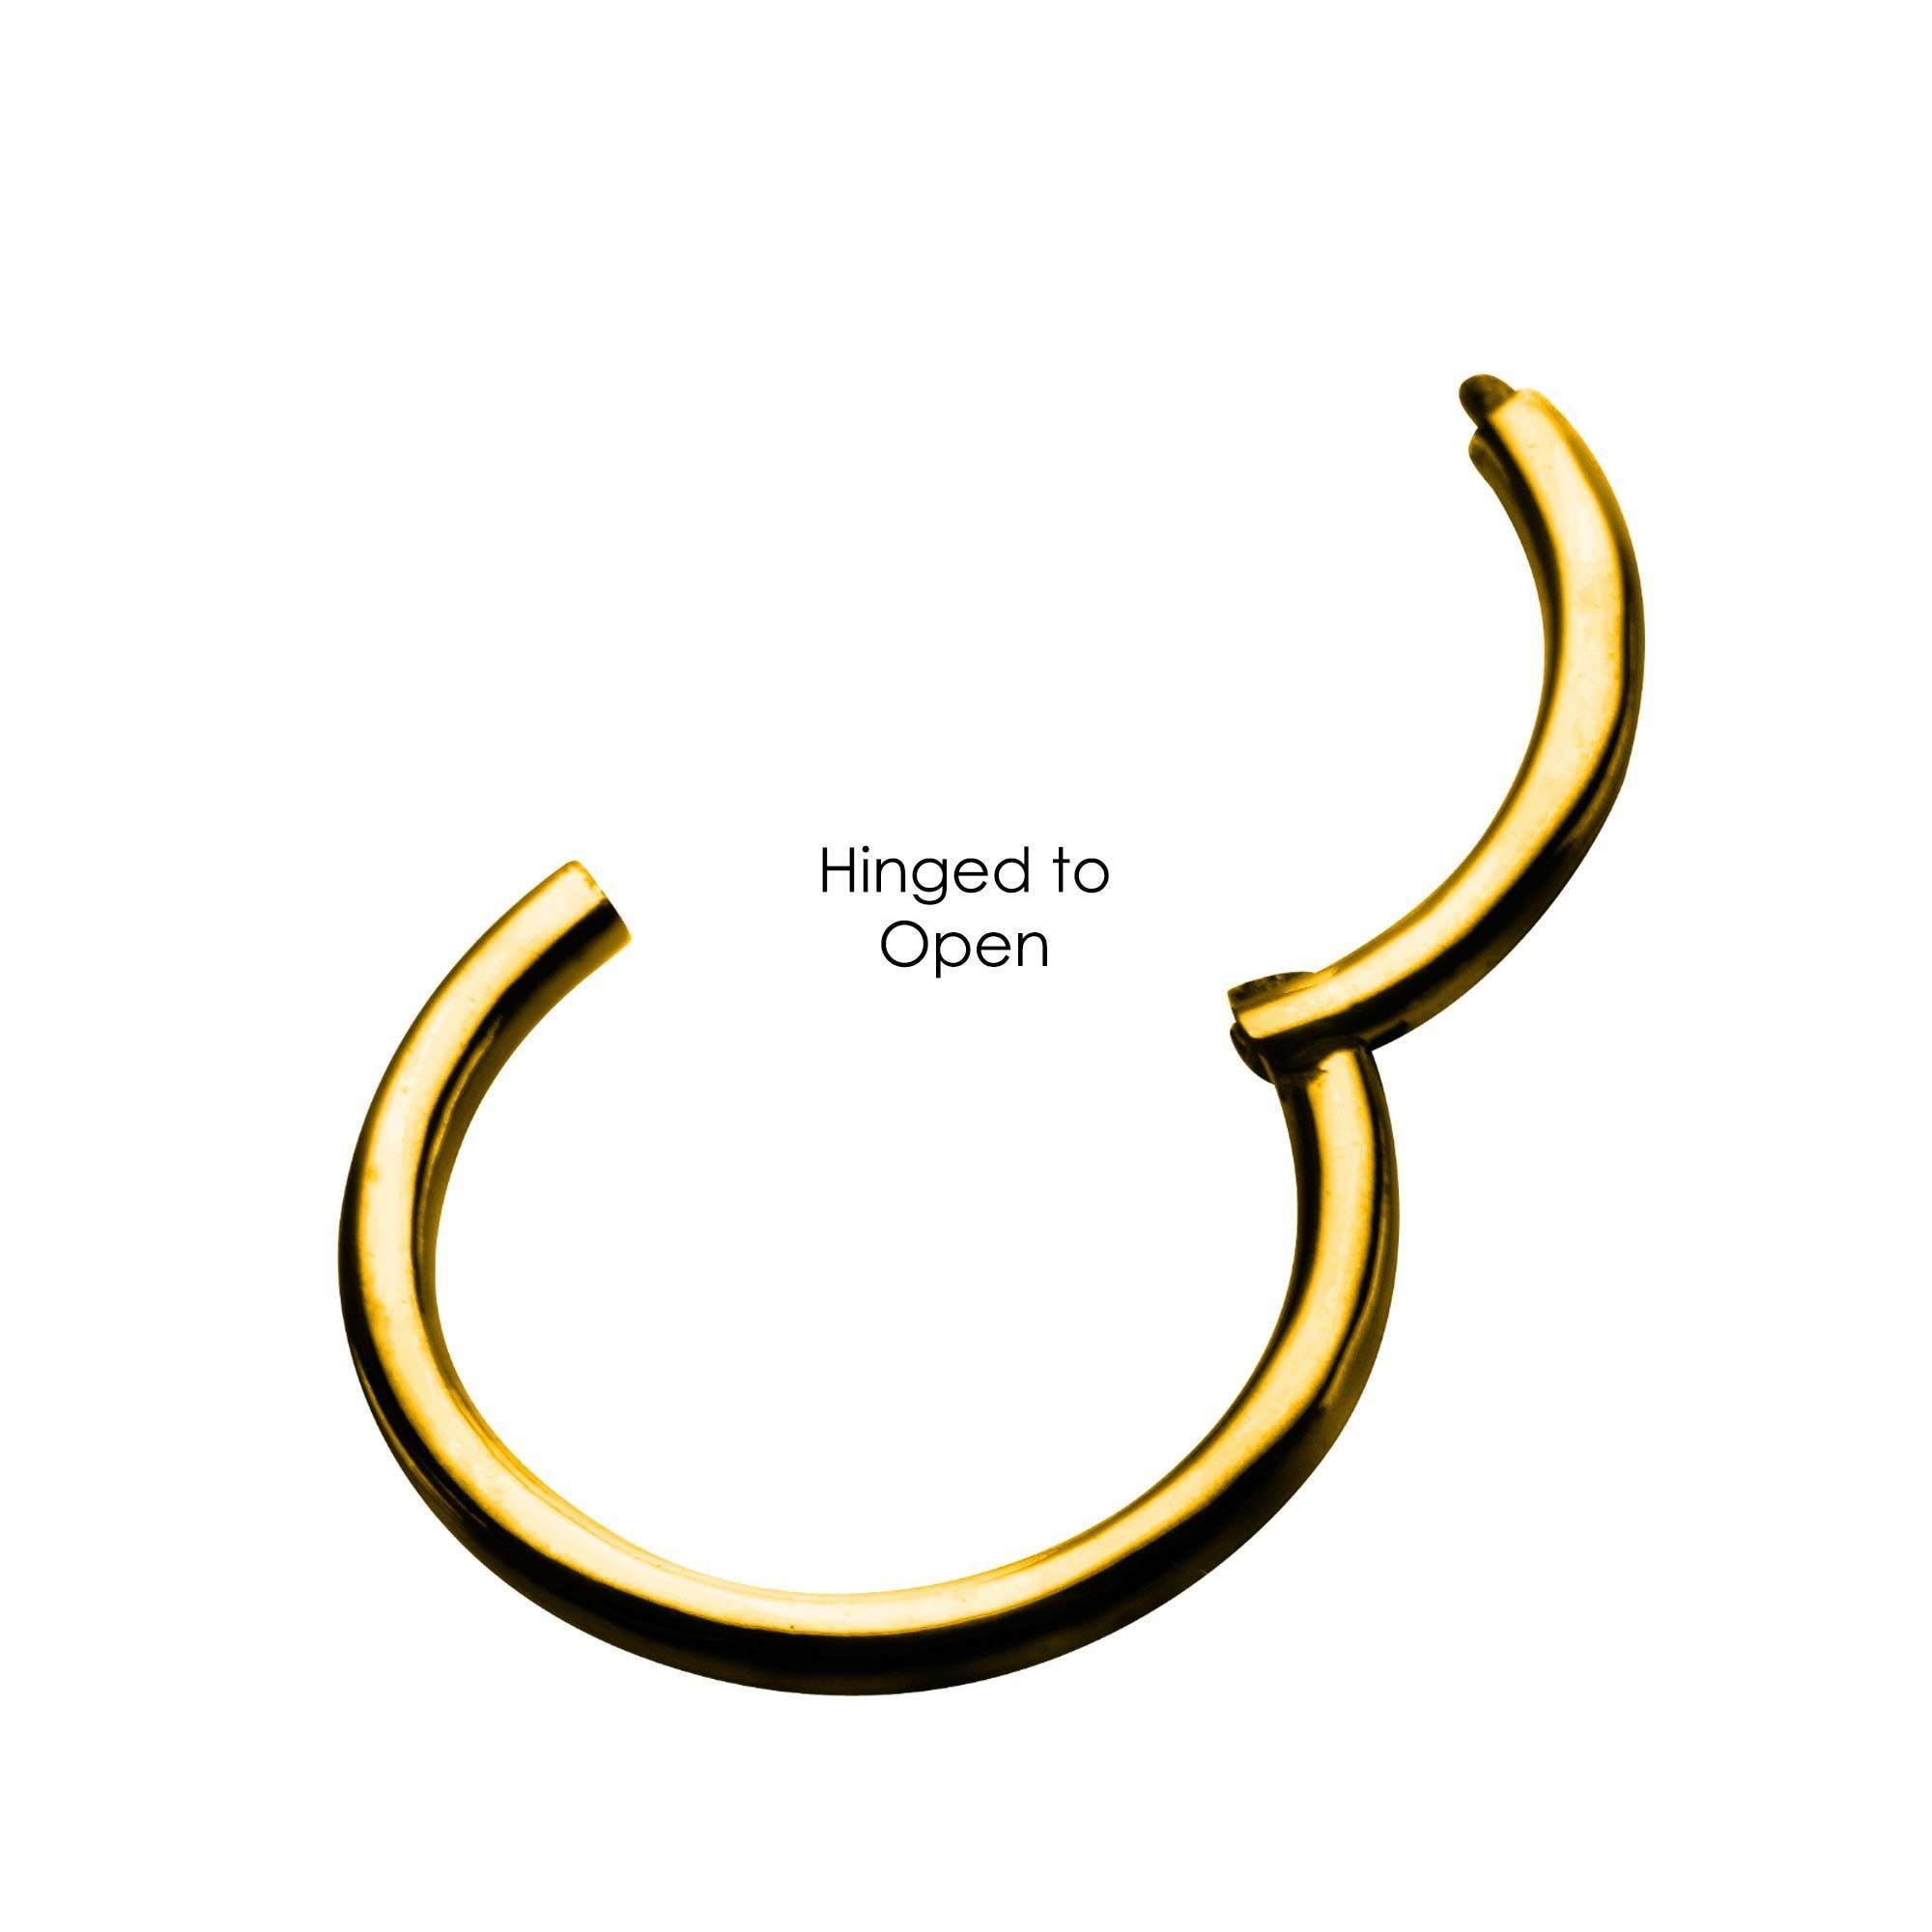 SEAMLESS CLICKER Gold Plated Clicker Hinged Segment Ring sbvsgrhgp -Rebel Bod-RebelBod